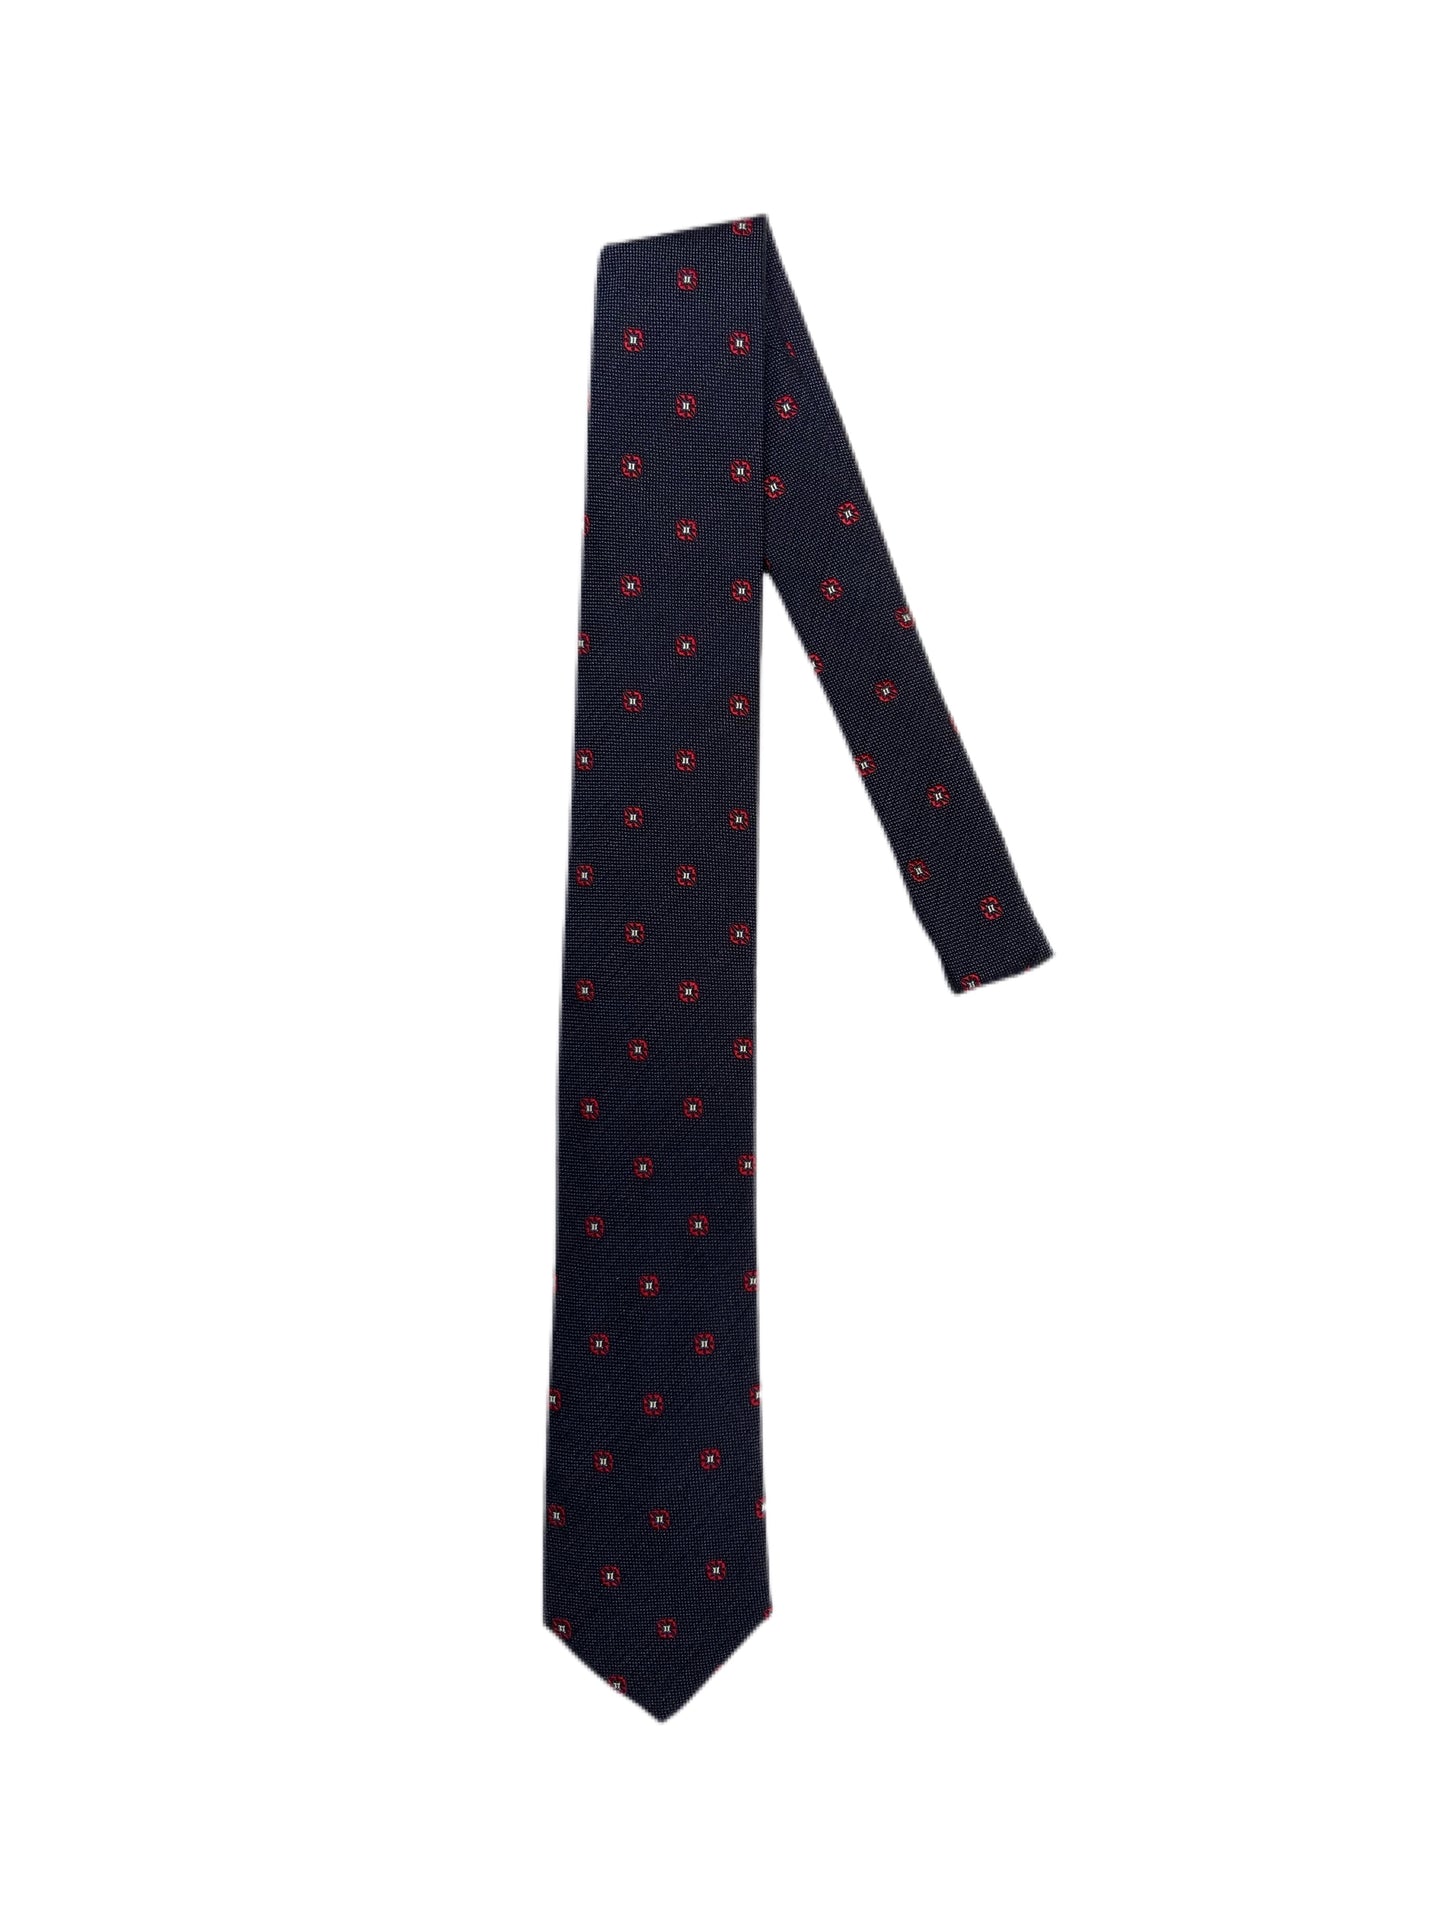 Pattern Silk Blend Tie Ties fig. Navy with Red Flowers  